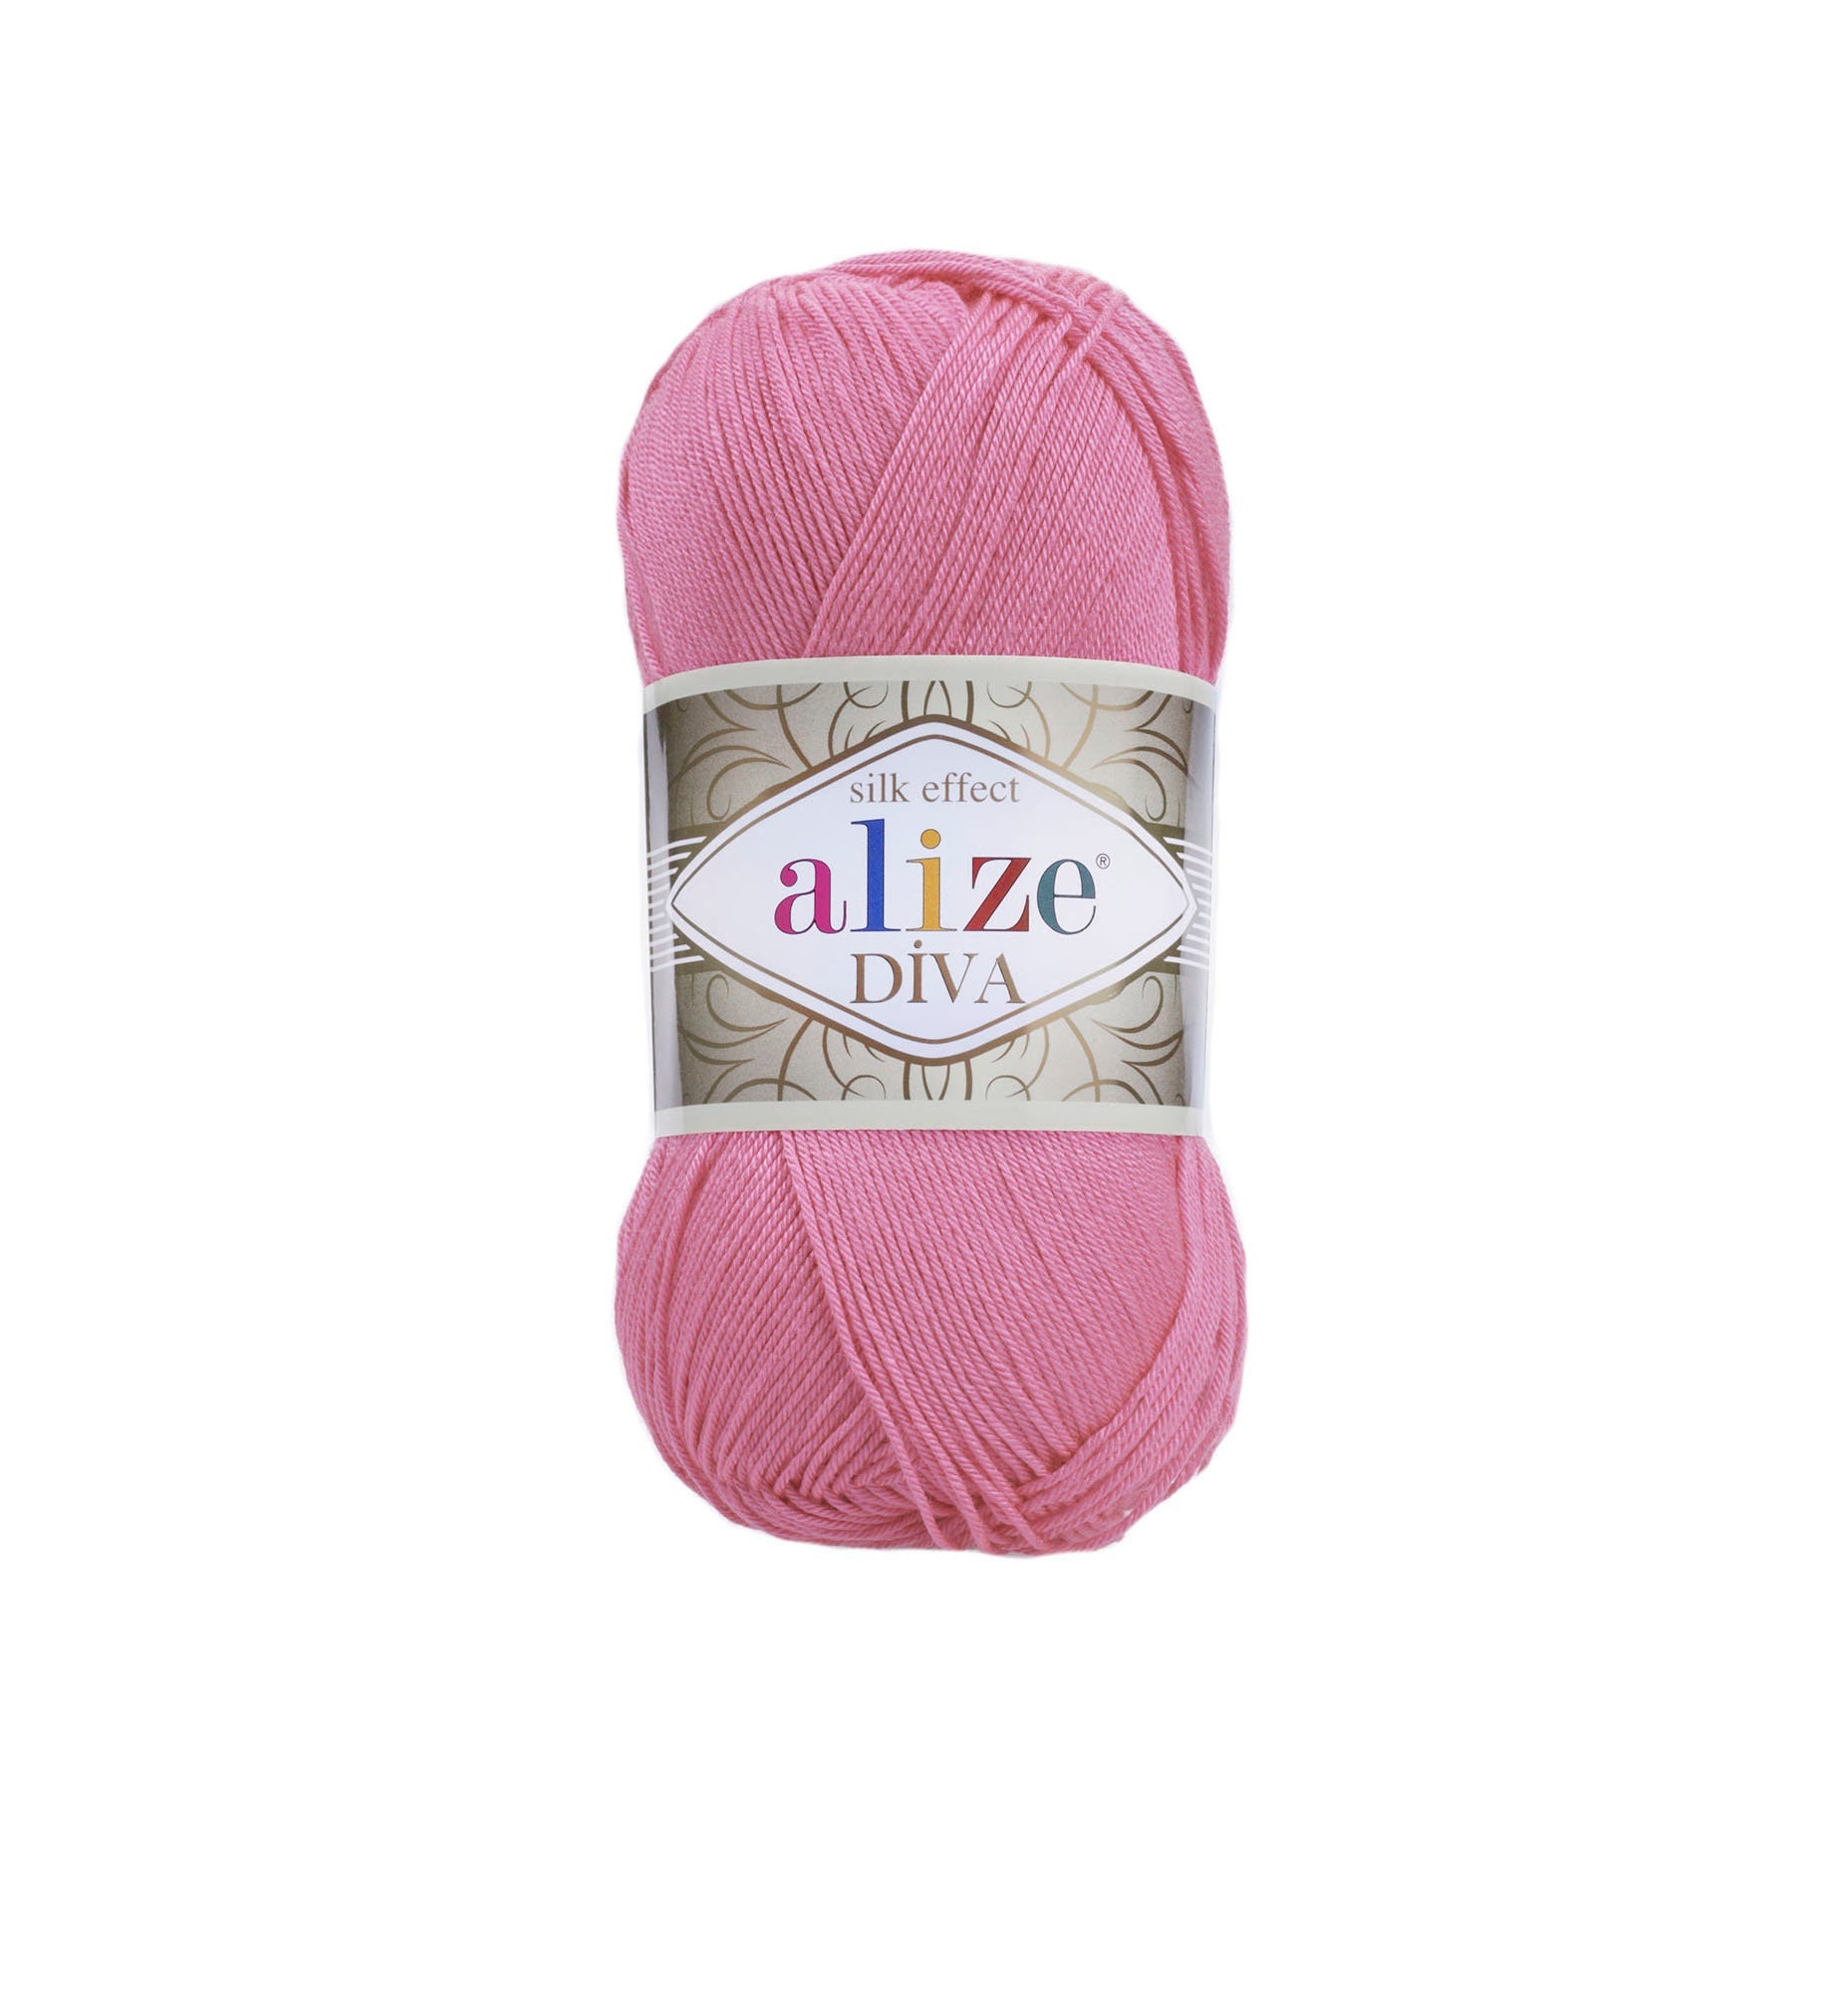 Alize Diva, Alize Diva Silky Effect, %100 Acrylic Yarn, Crochet